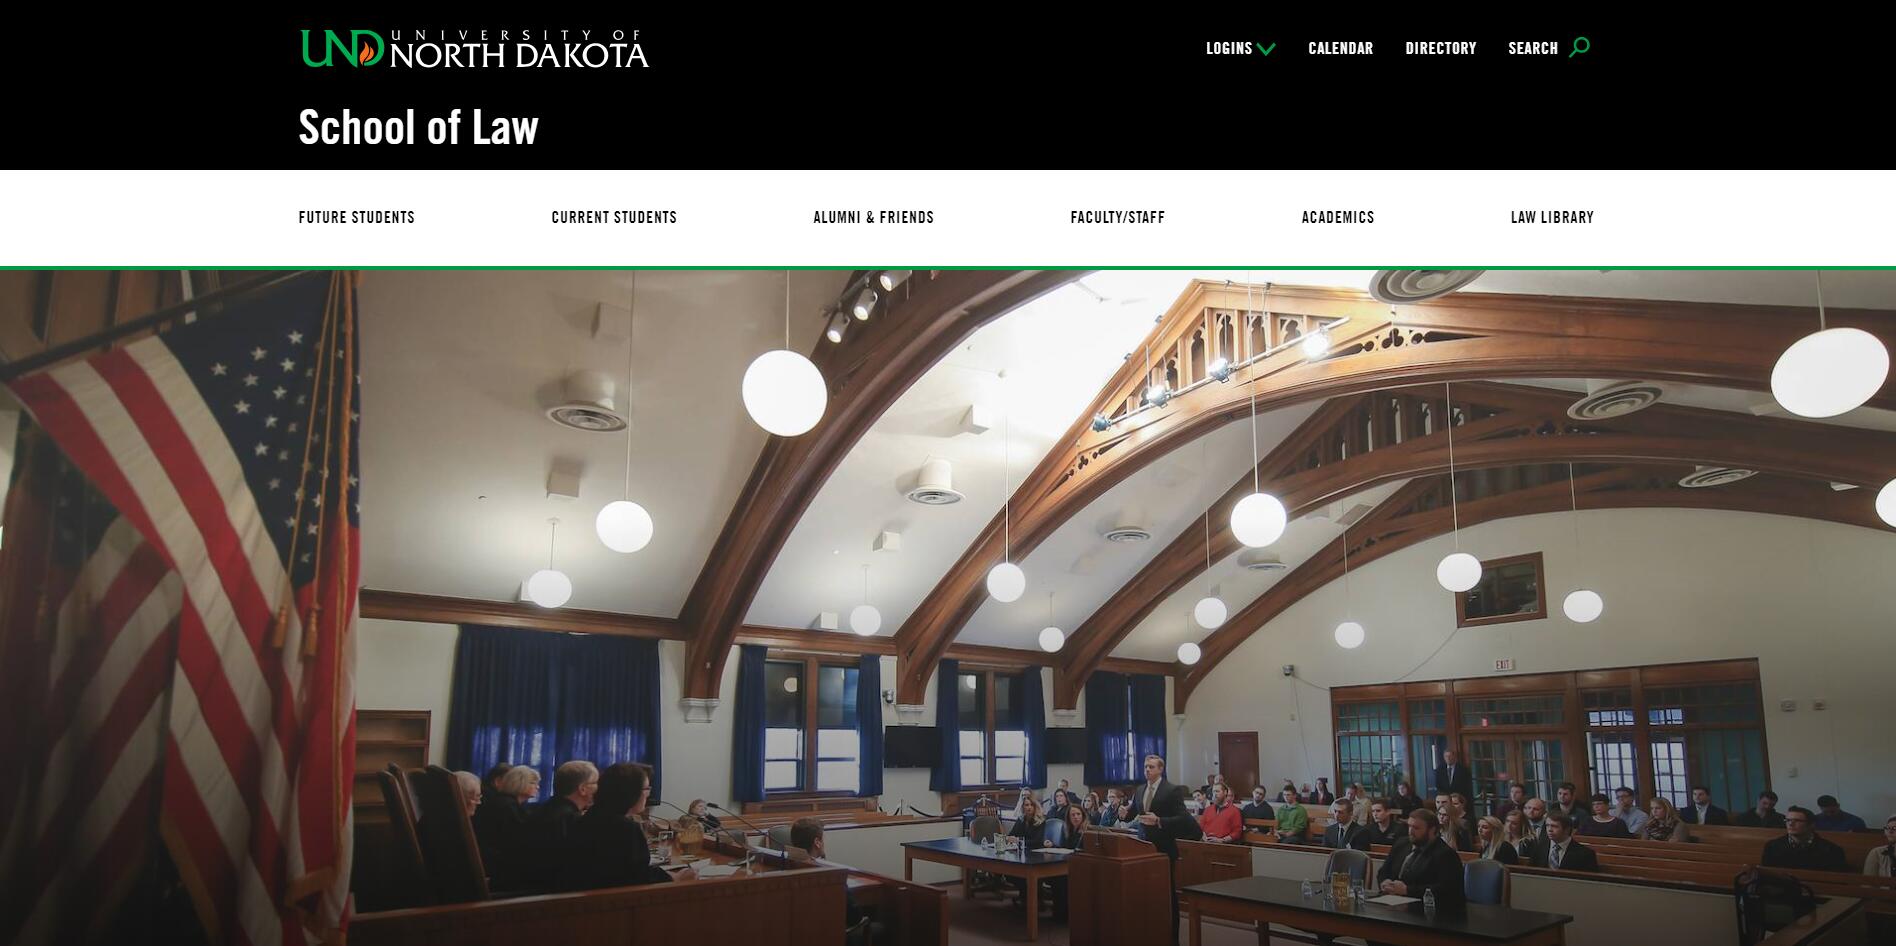 The School of Law at University of North Dakota